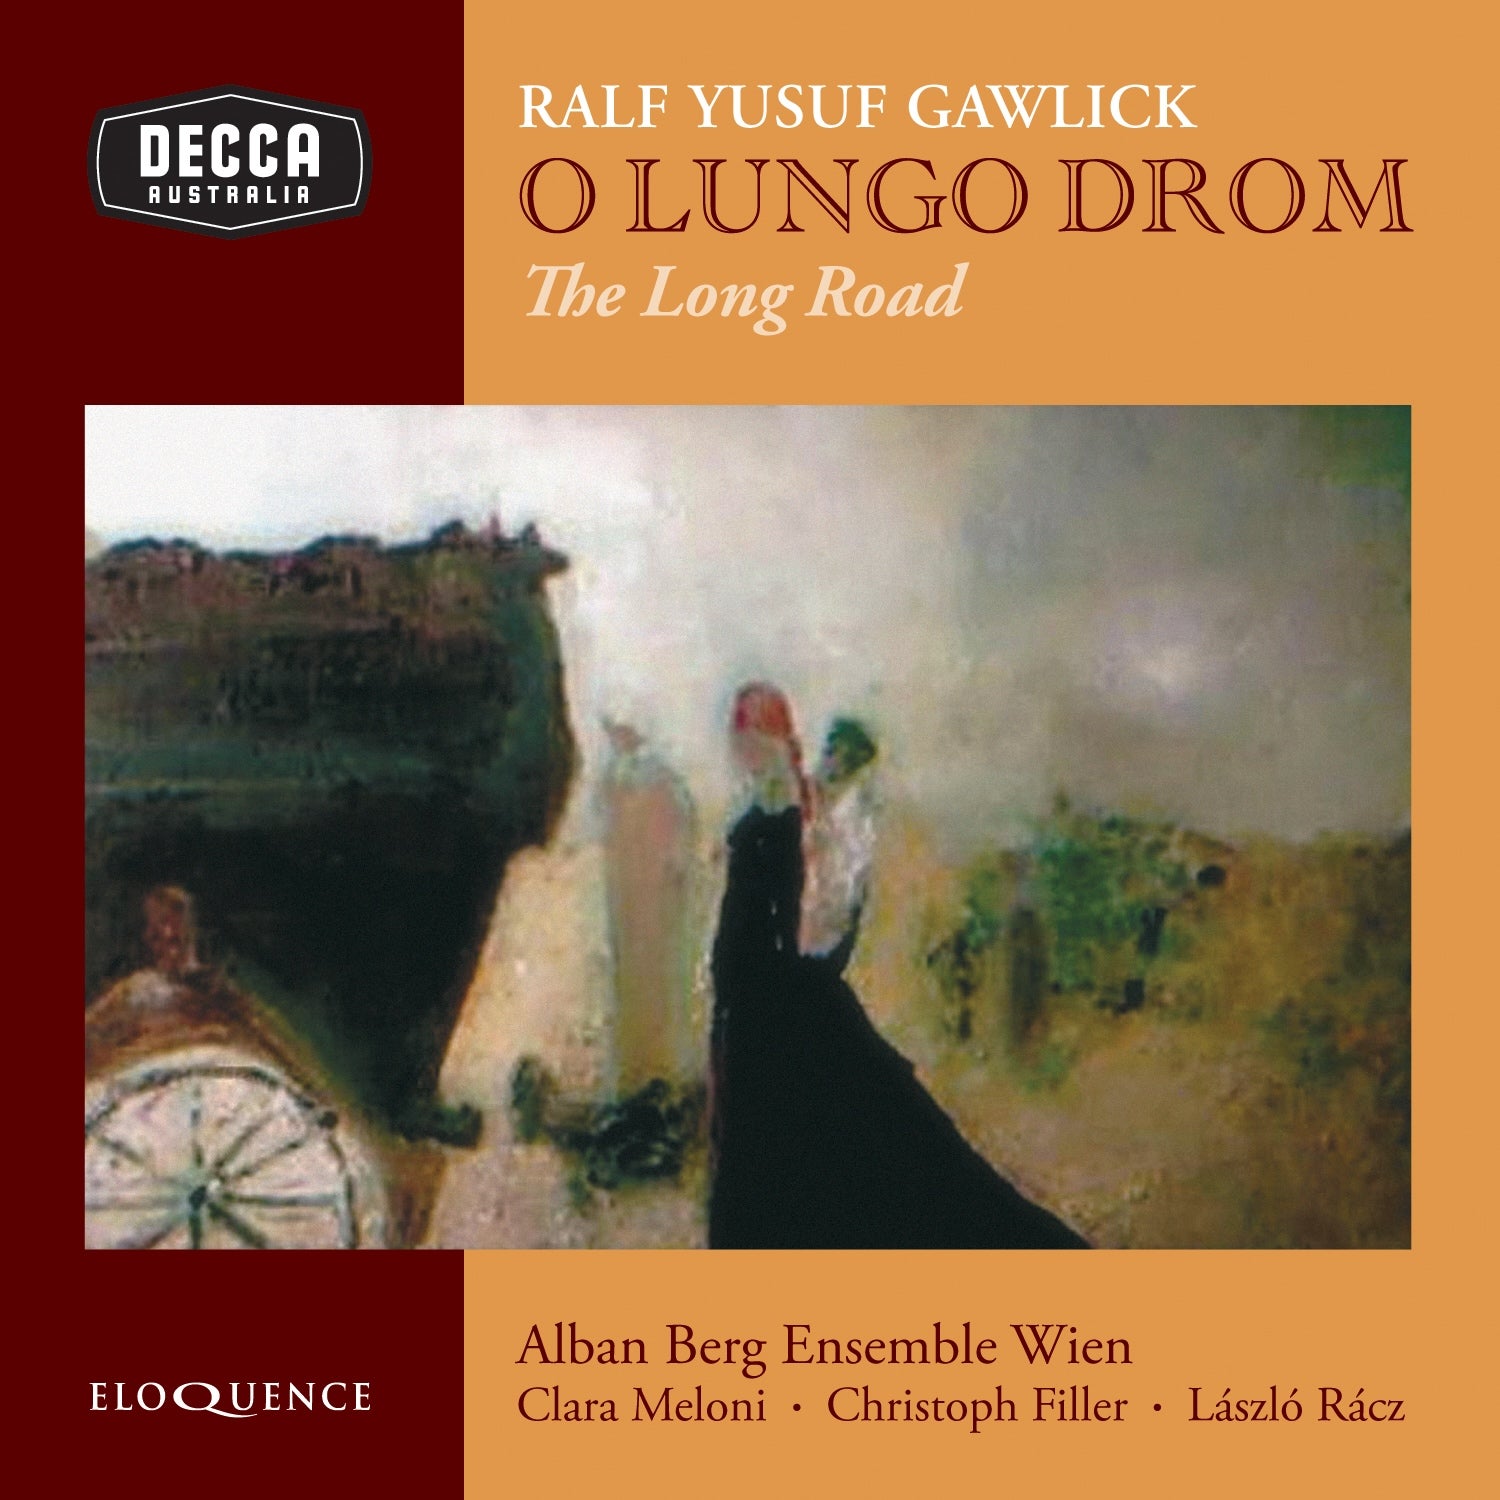 Decca Australia, Ralf Yusuf Gawlick O Lungro Drom - The Long Road CD cover. Eloquence. Alban Berg Ensemble Wien. Clara Meloni, Christoph Filler, Laszlo Racz.